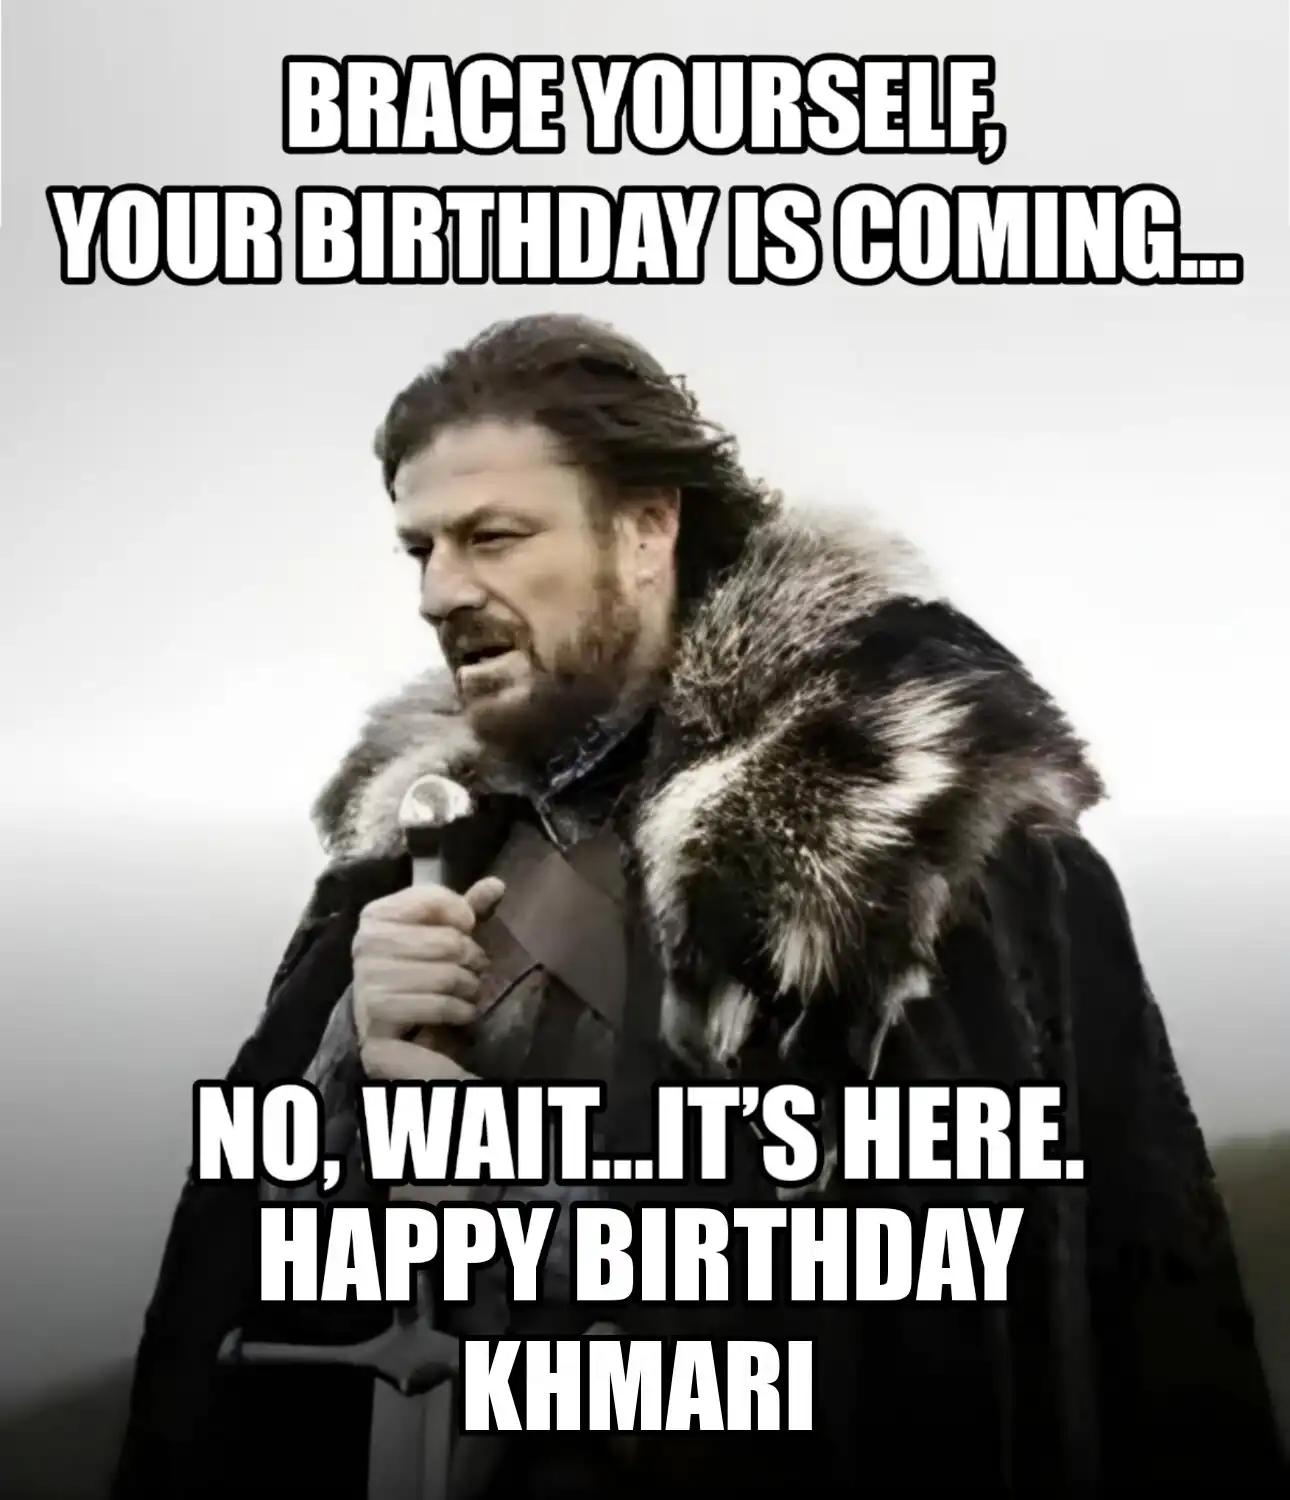 Happy Birthday Khmari Brace Yourself Your Birthday Is Coming Meme